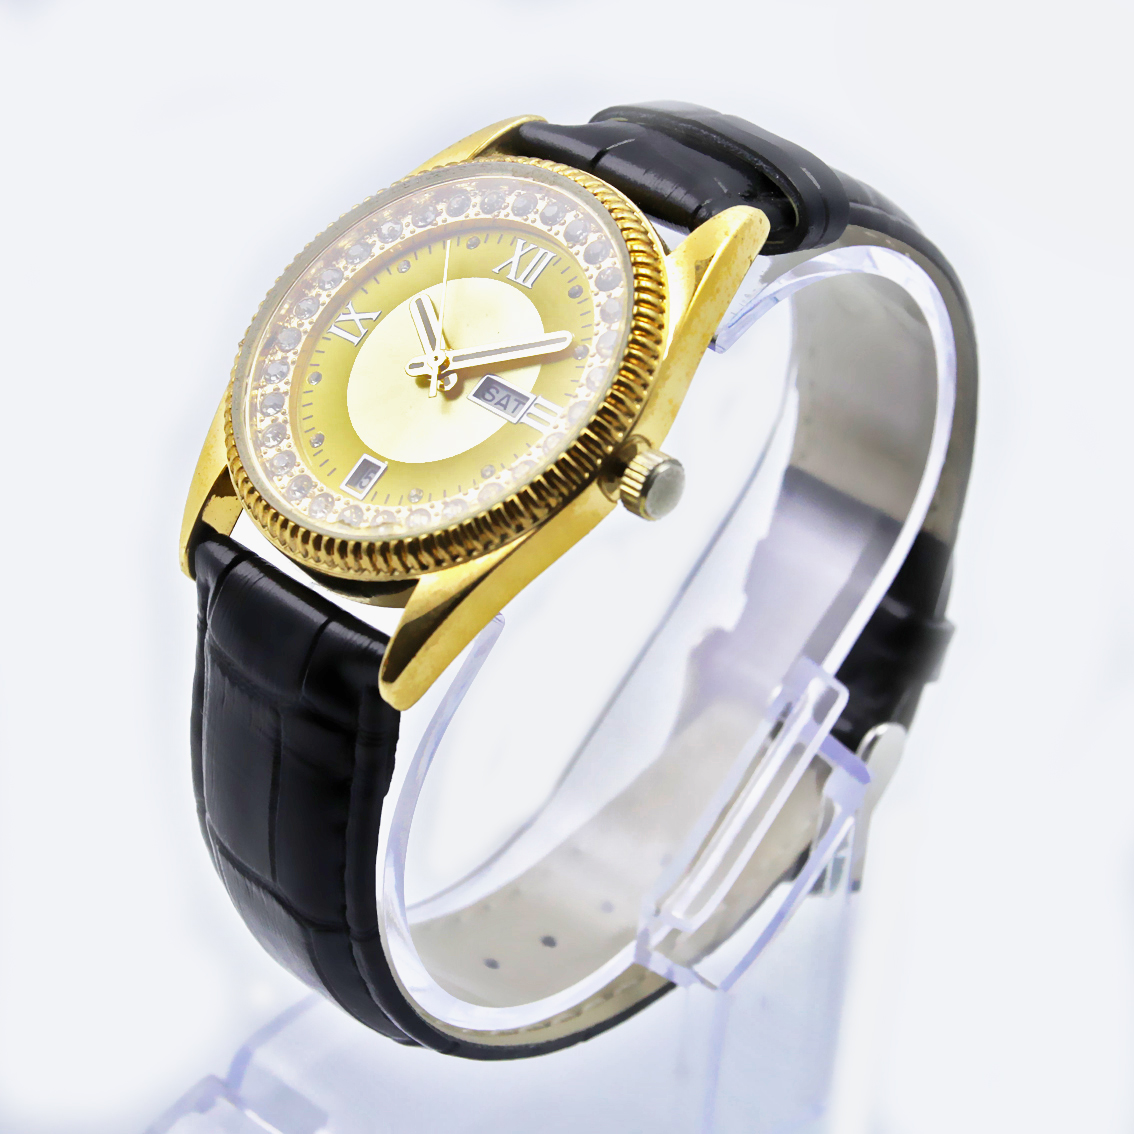 #02047Men's wristwatch quartz analog leather strap watch